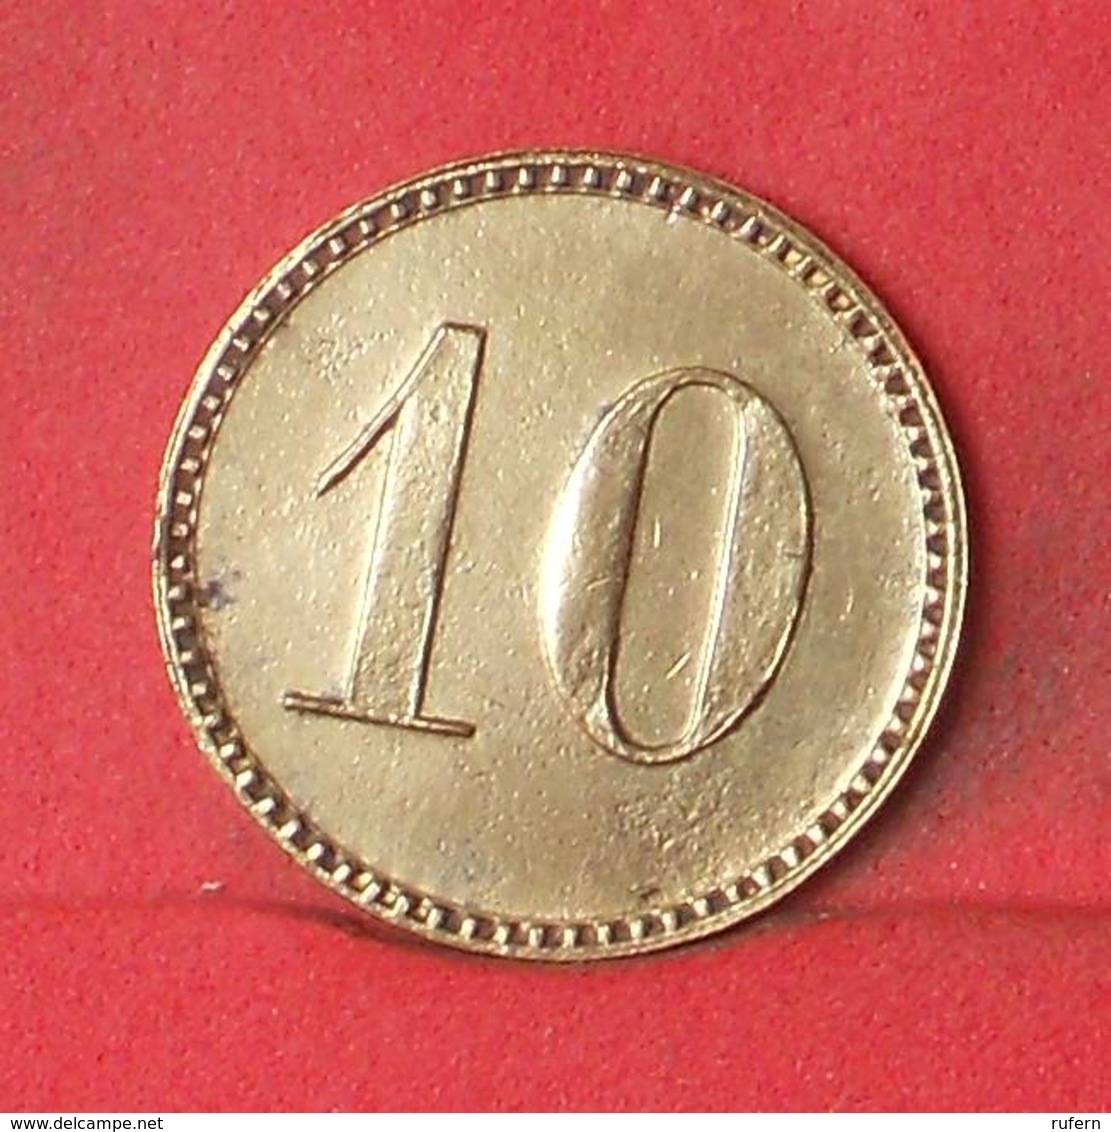 GERMANY 10 PFENNIG 1871-1948 - WERT-MARKE       - (Nº35212) - Monetari/ Di Necessità